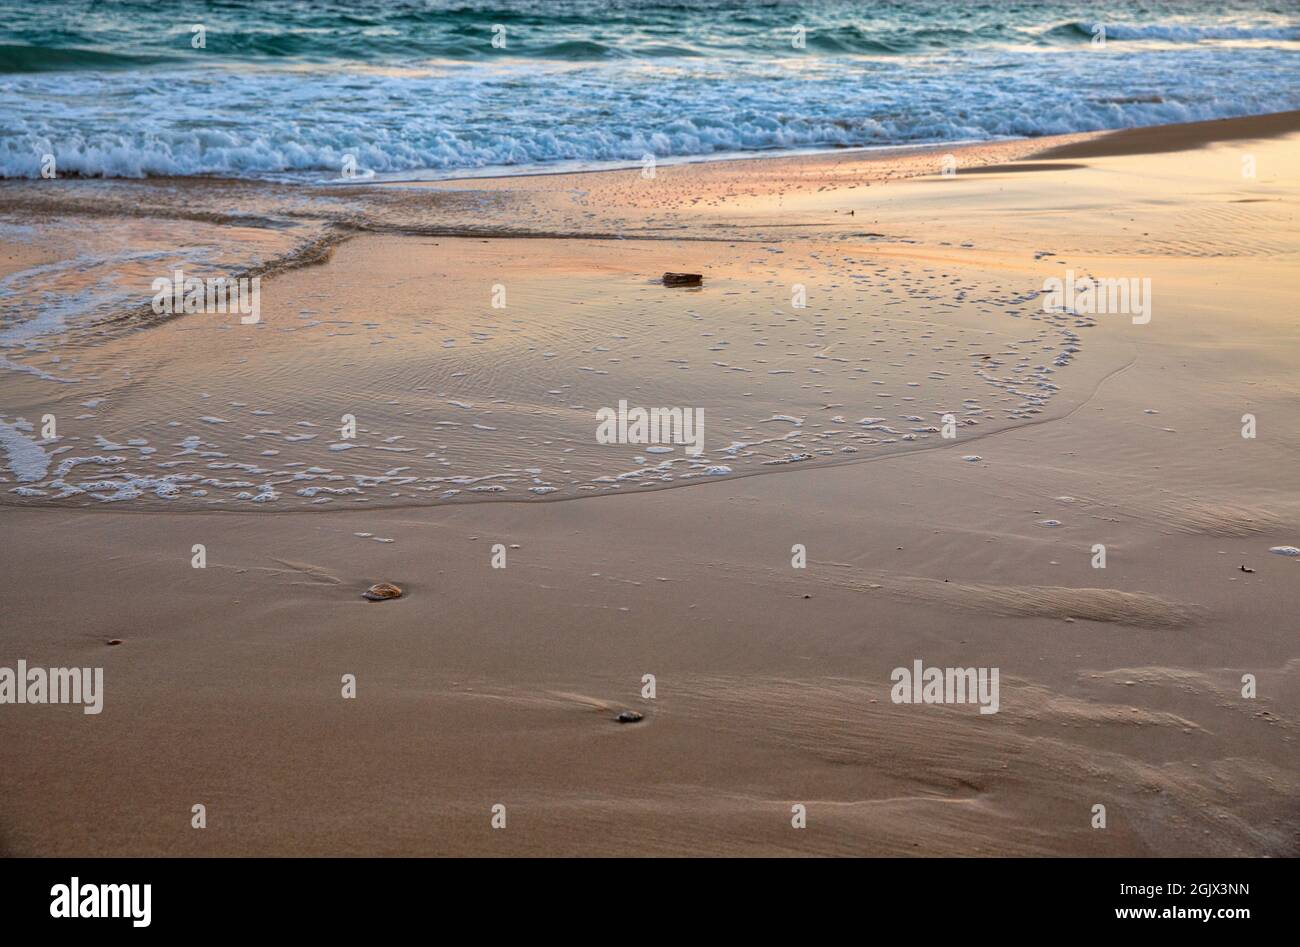 Evening surf on the sea sandy beach, Cyprus Stock Photo